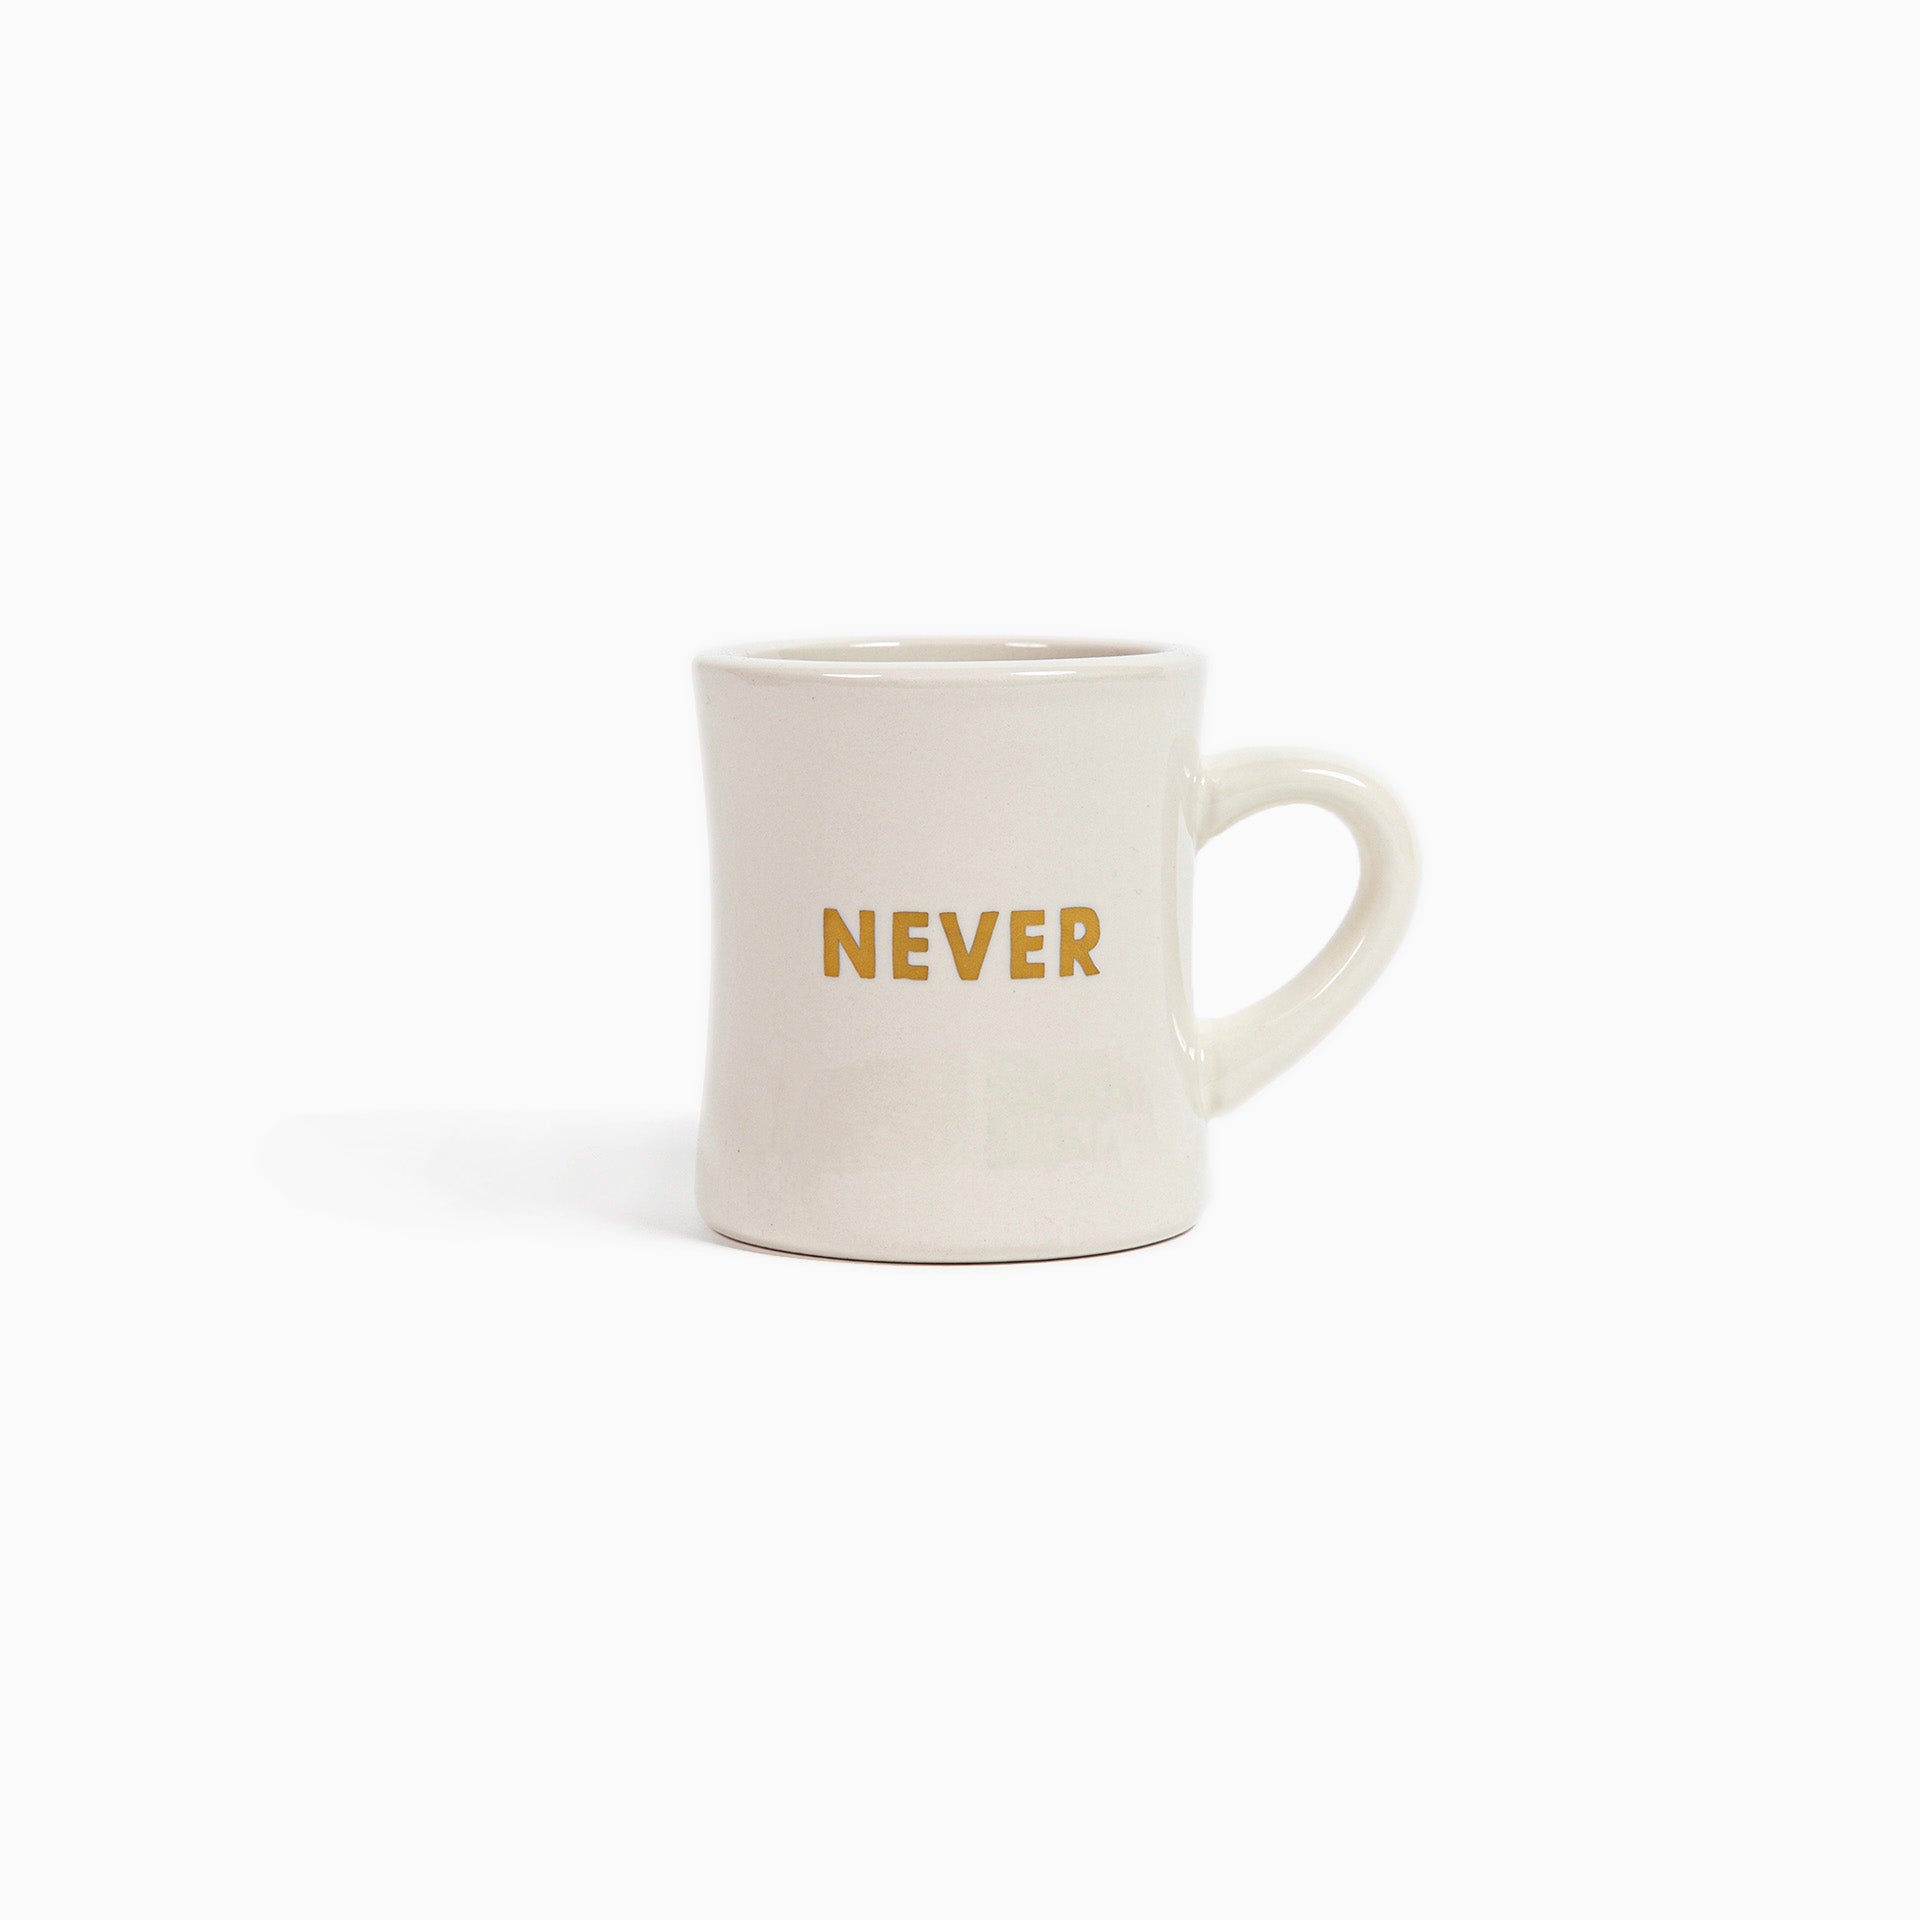 NEVER Mug